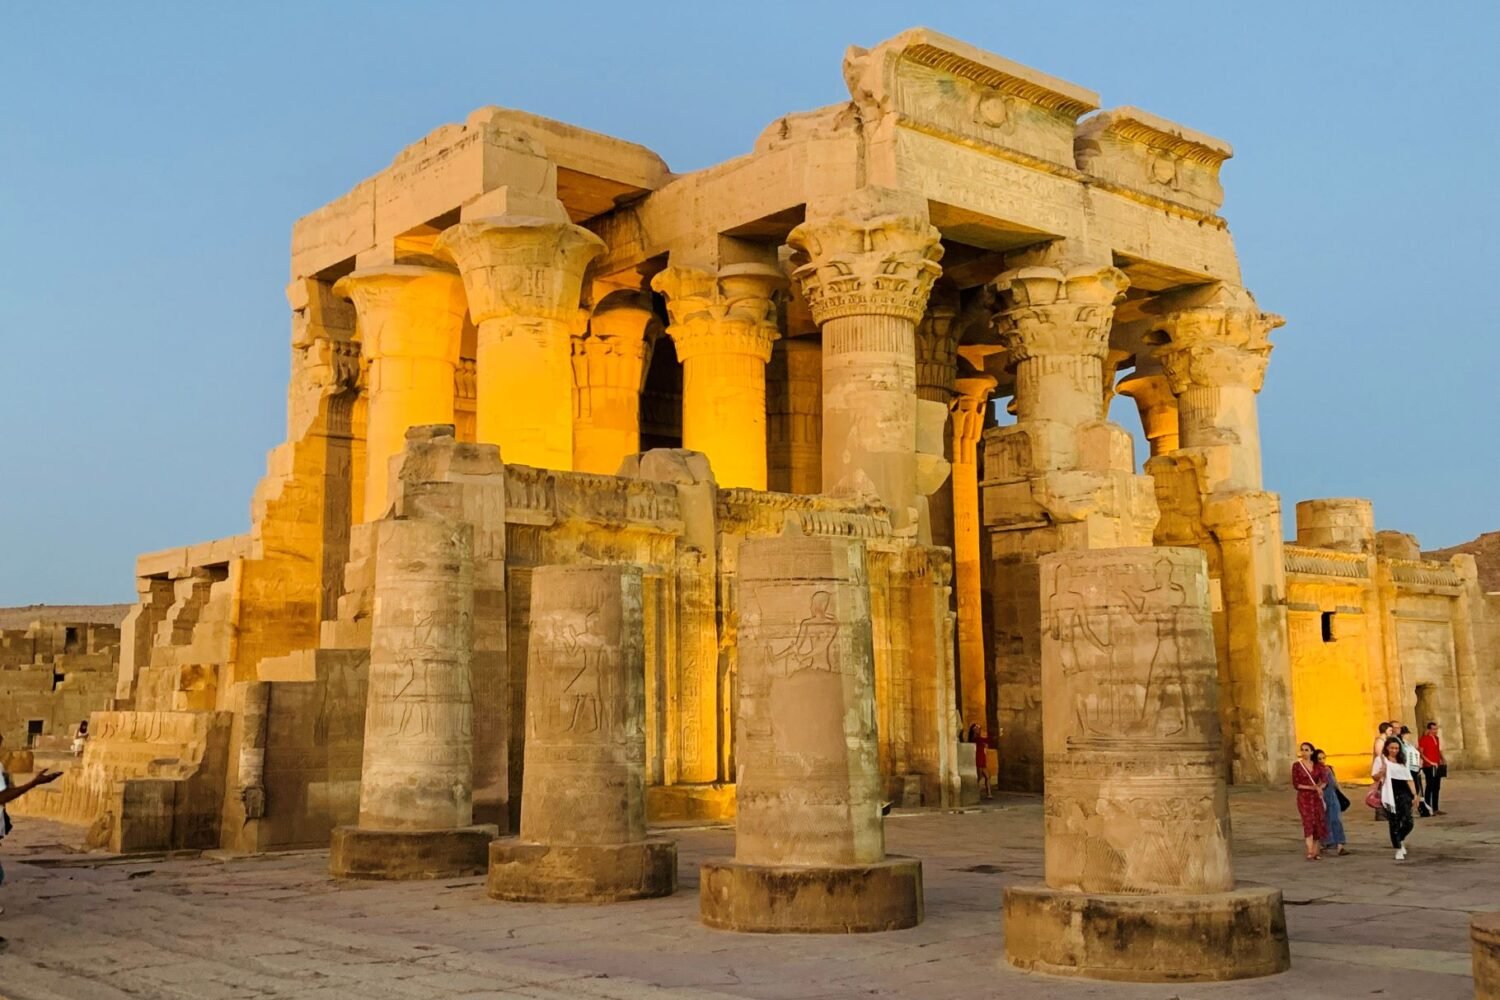 11 Day Egypt Tour: Cairo, Hurghada, Luxor, Aswan And Nile Cruise